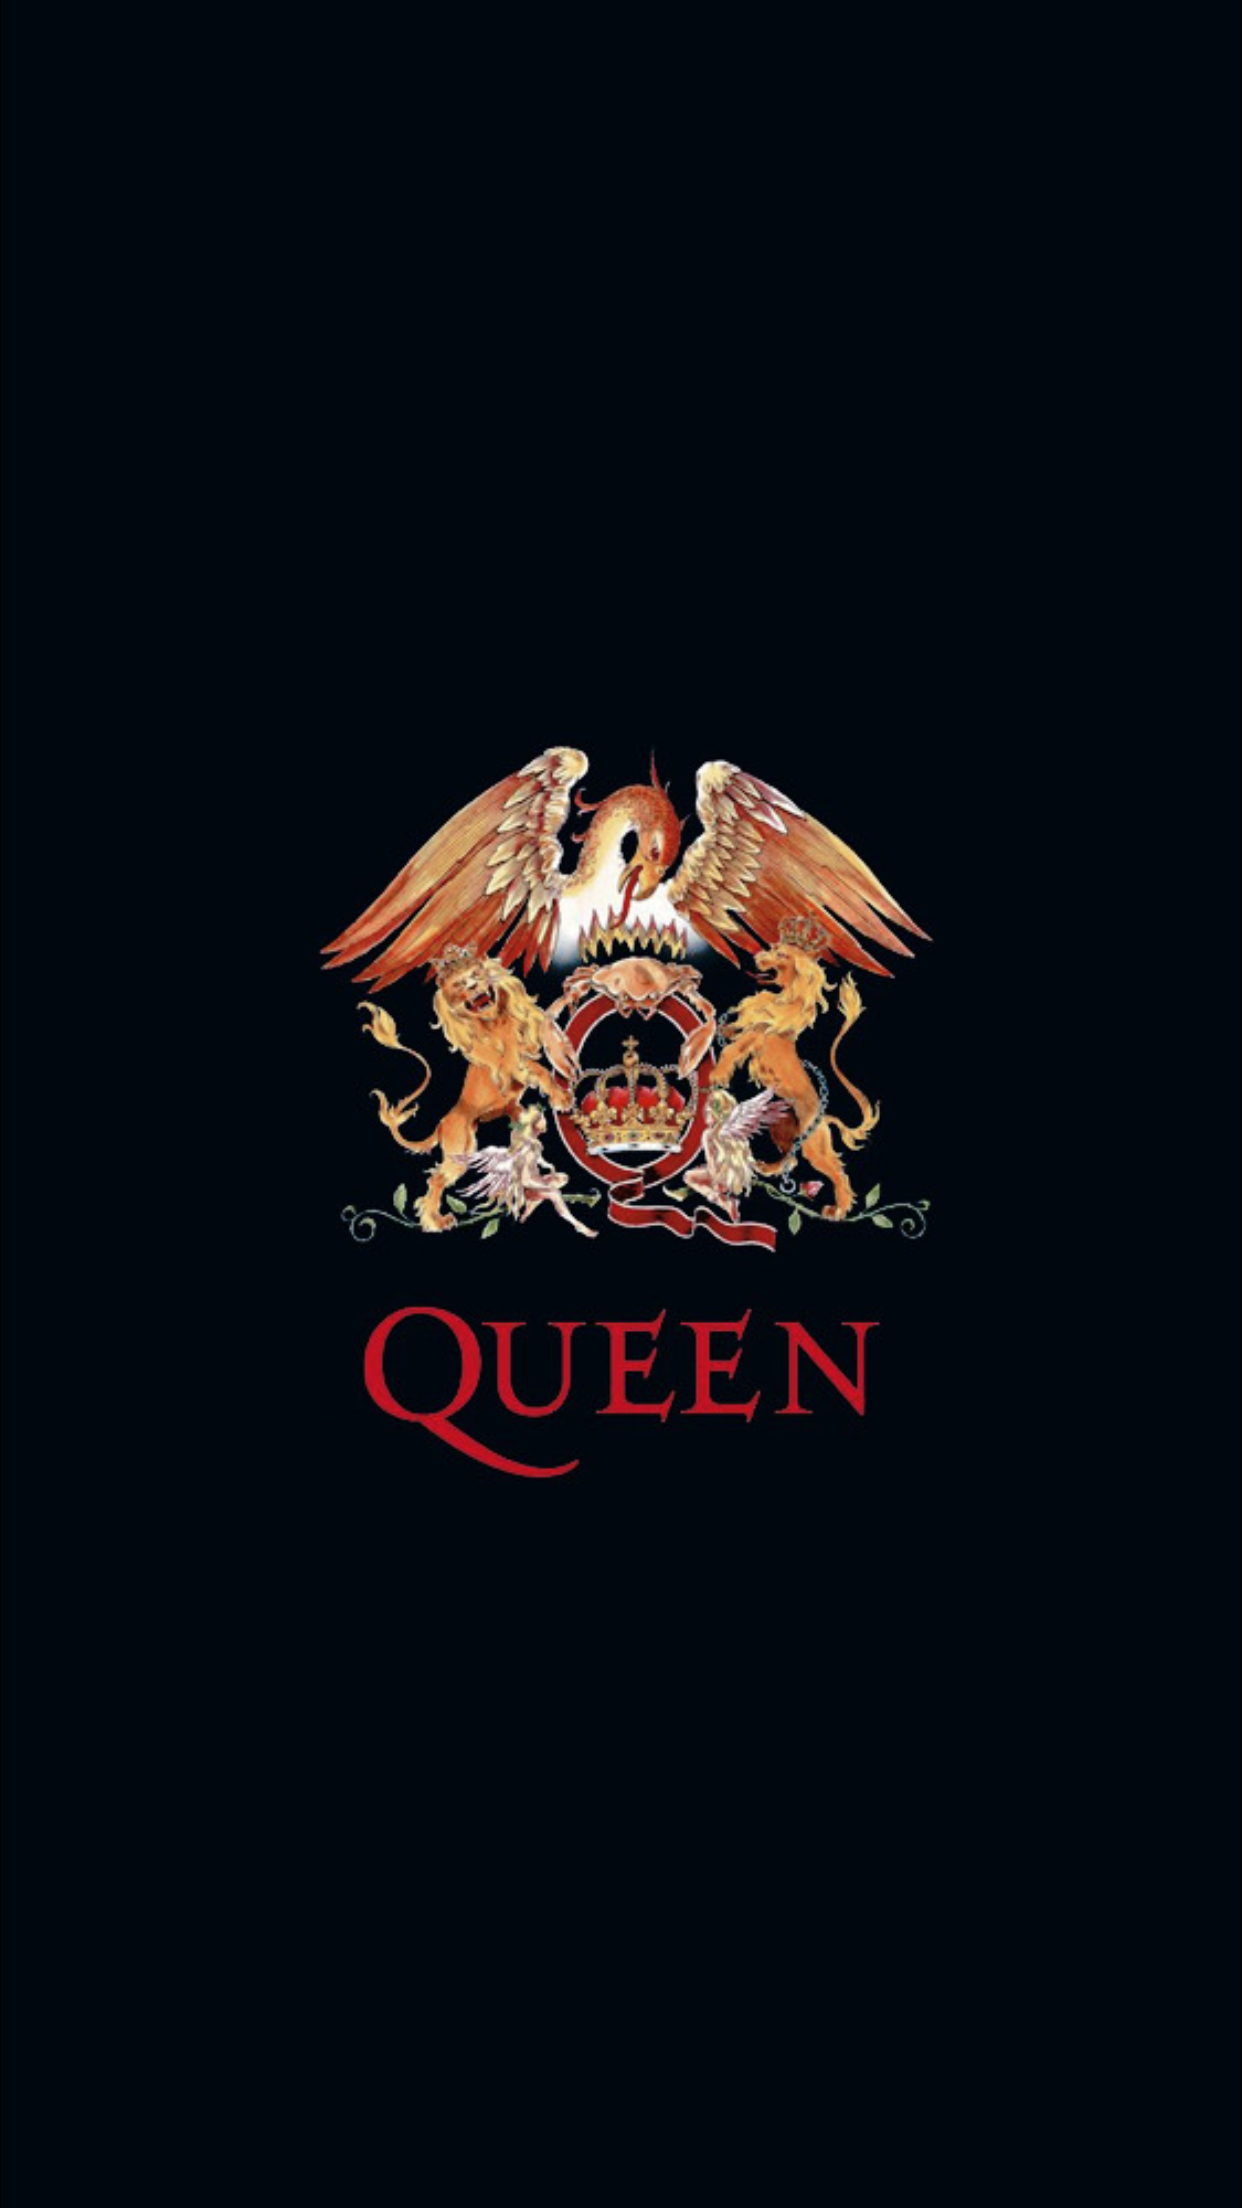 Queen Band iPhone Wallpapers - Wallpaper Cave